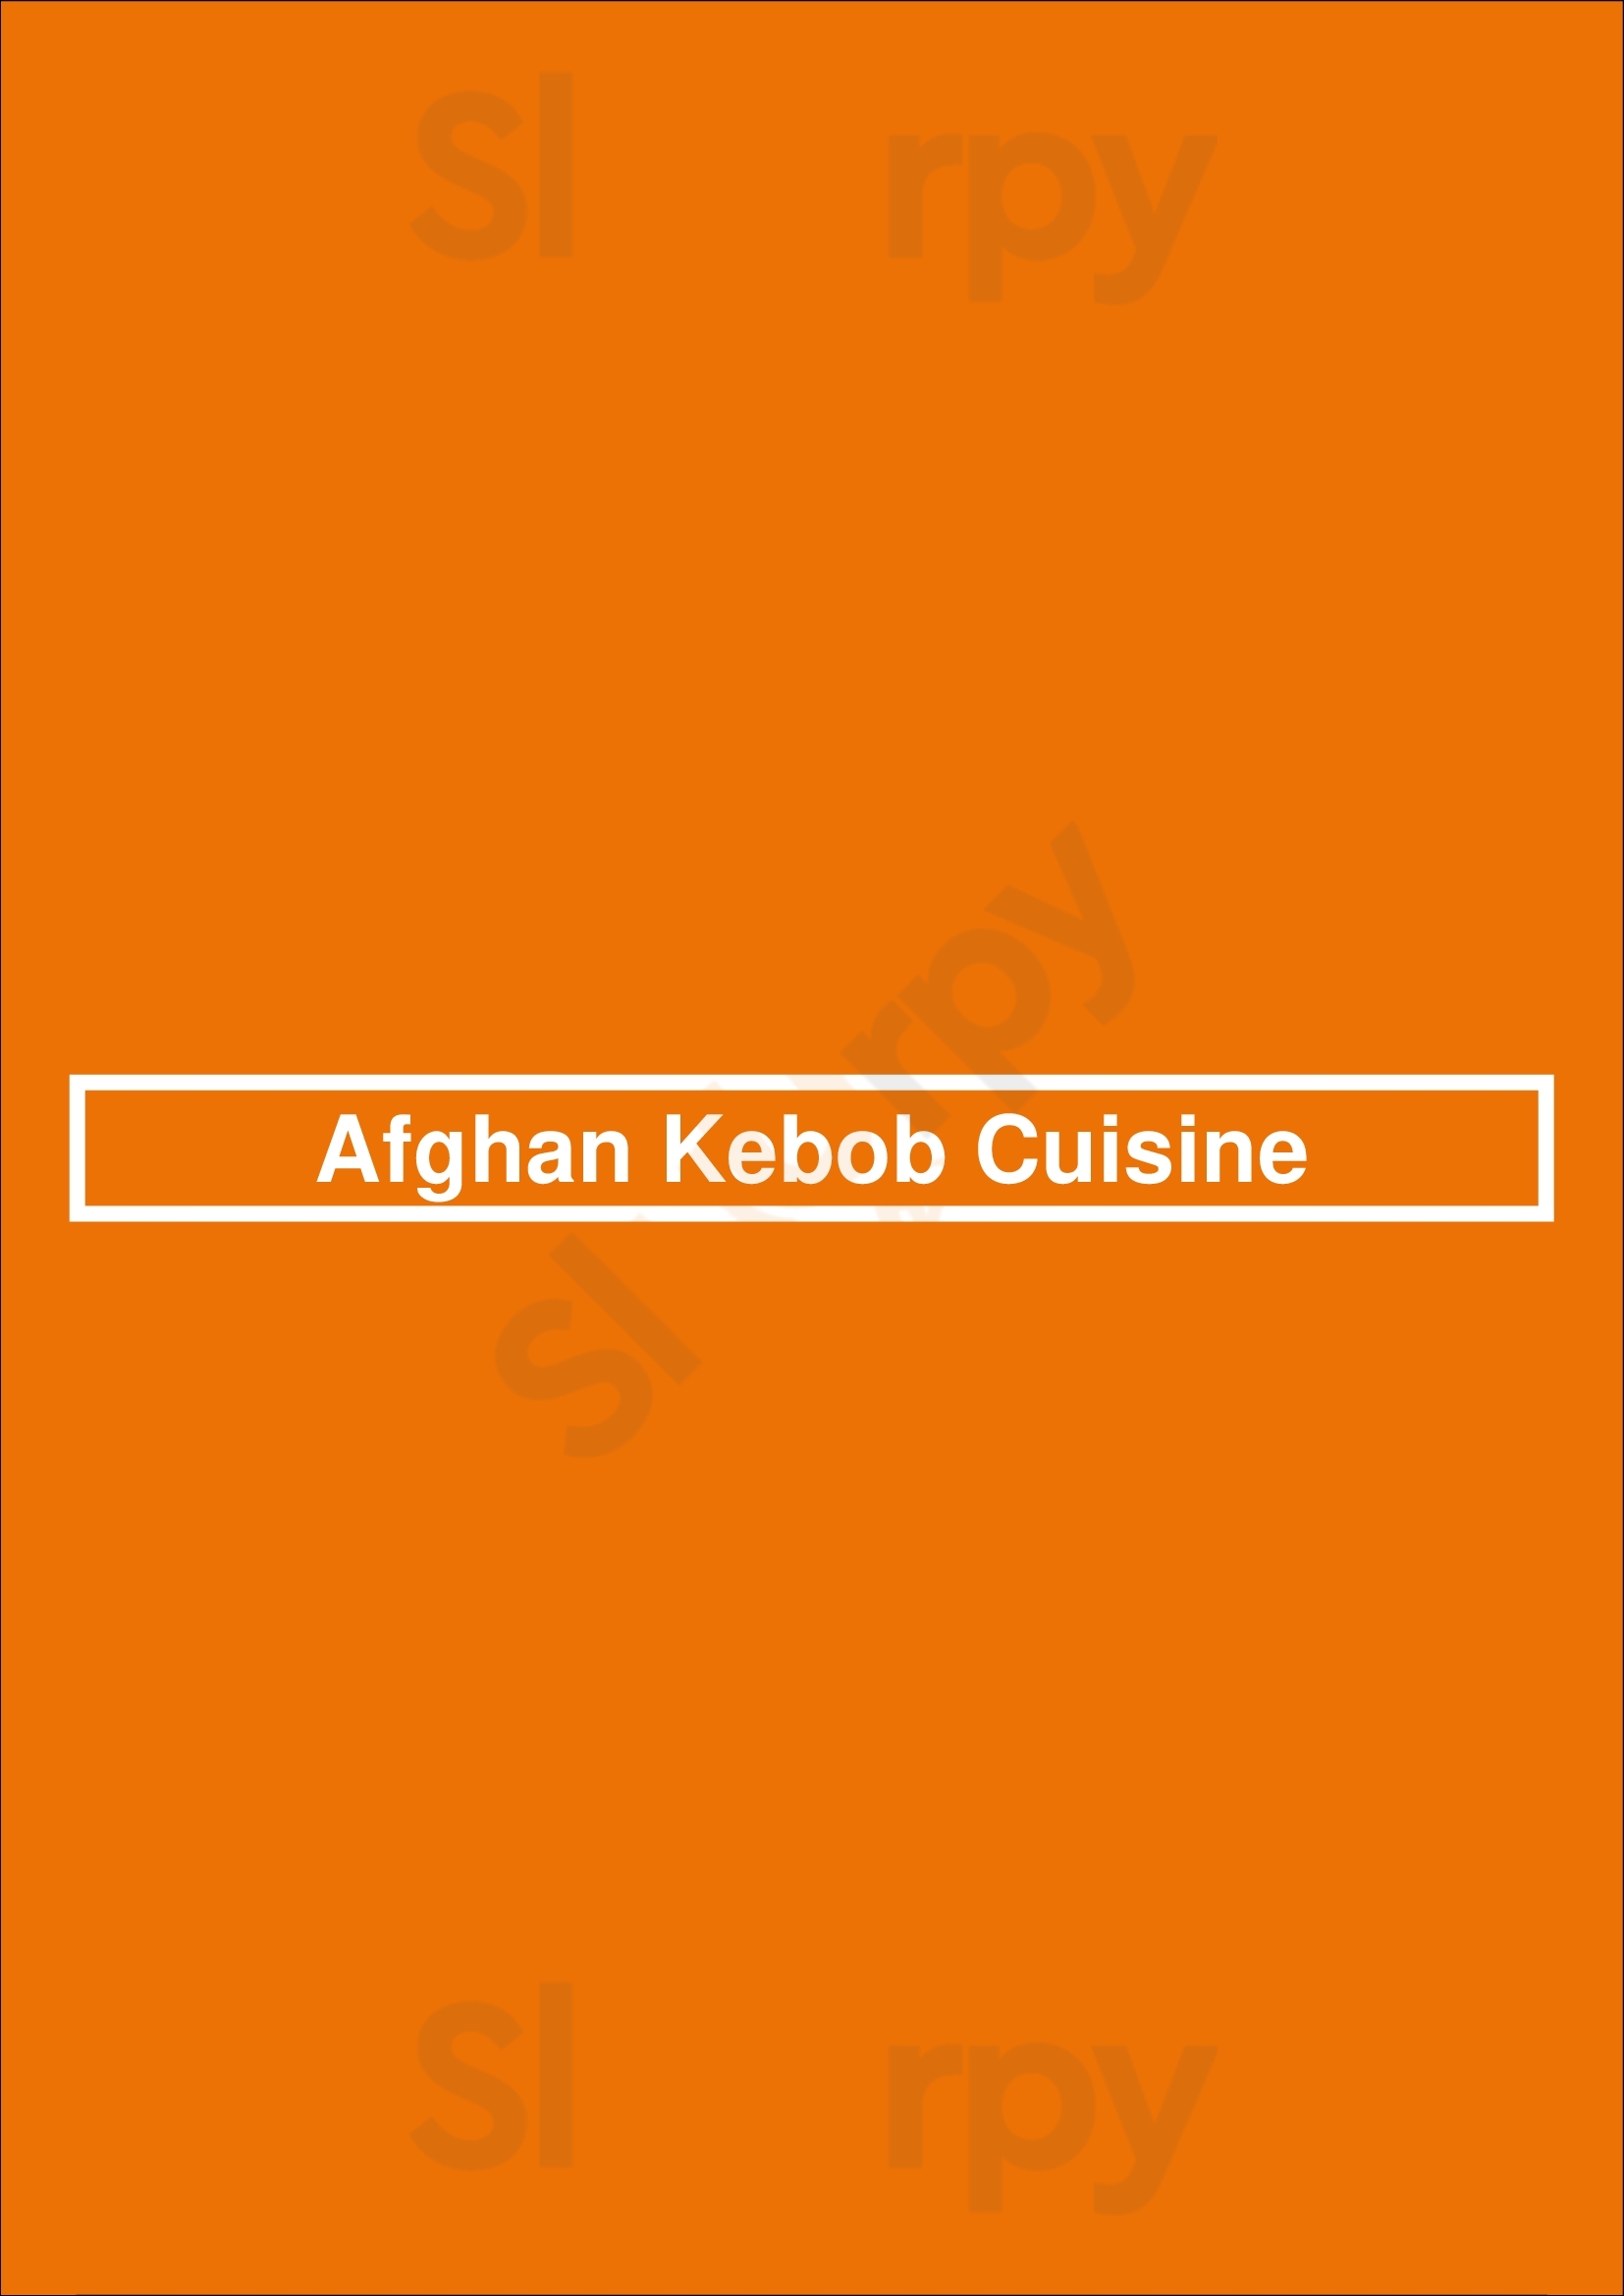 Afghan Kebob Cuisine Burlington Menu - 1